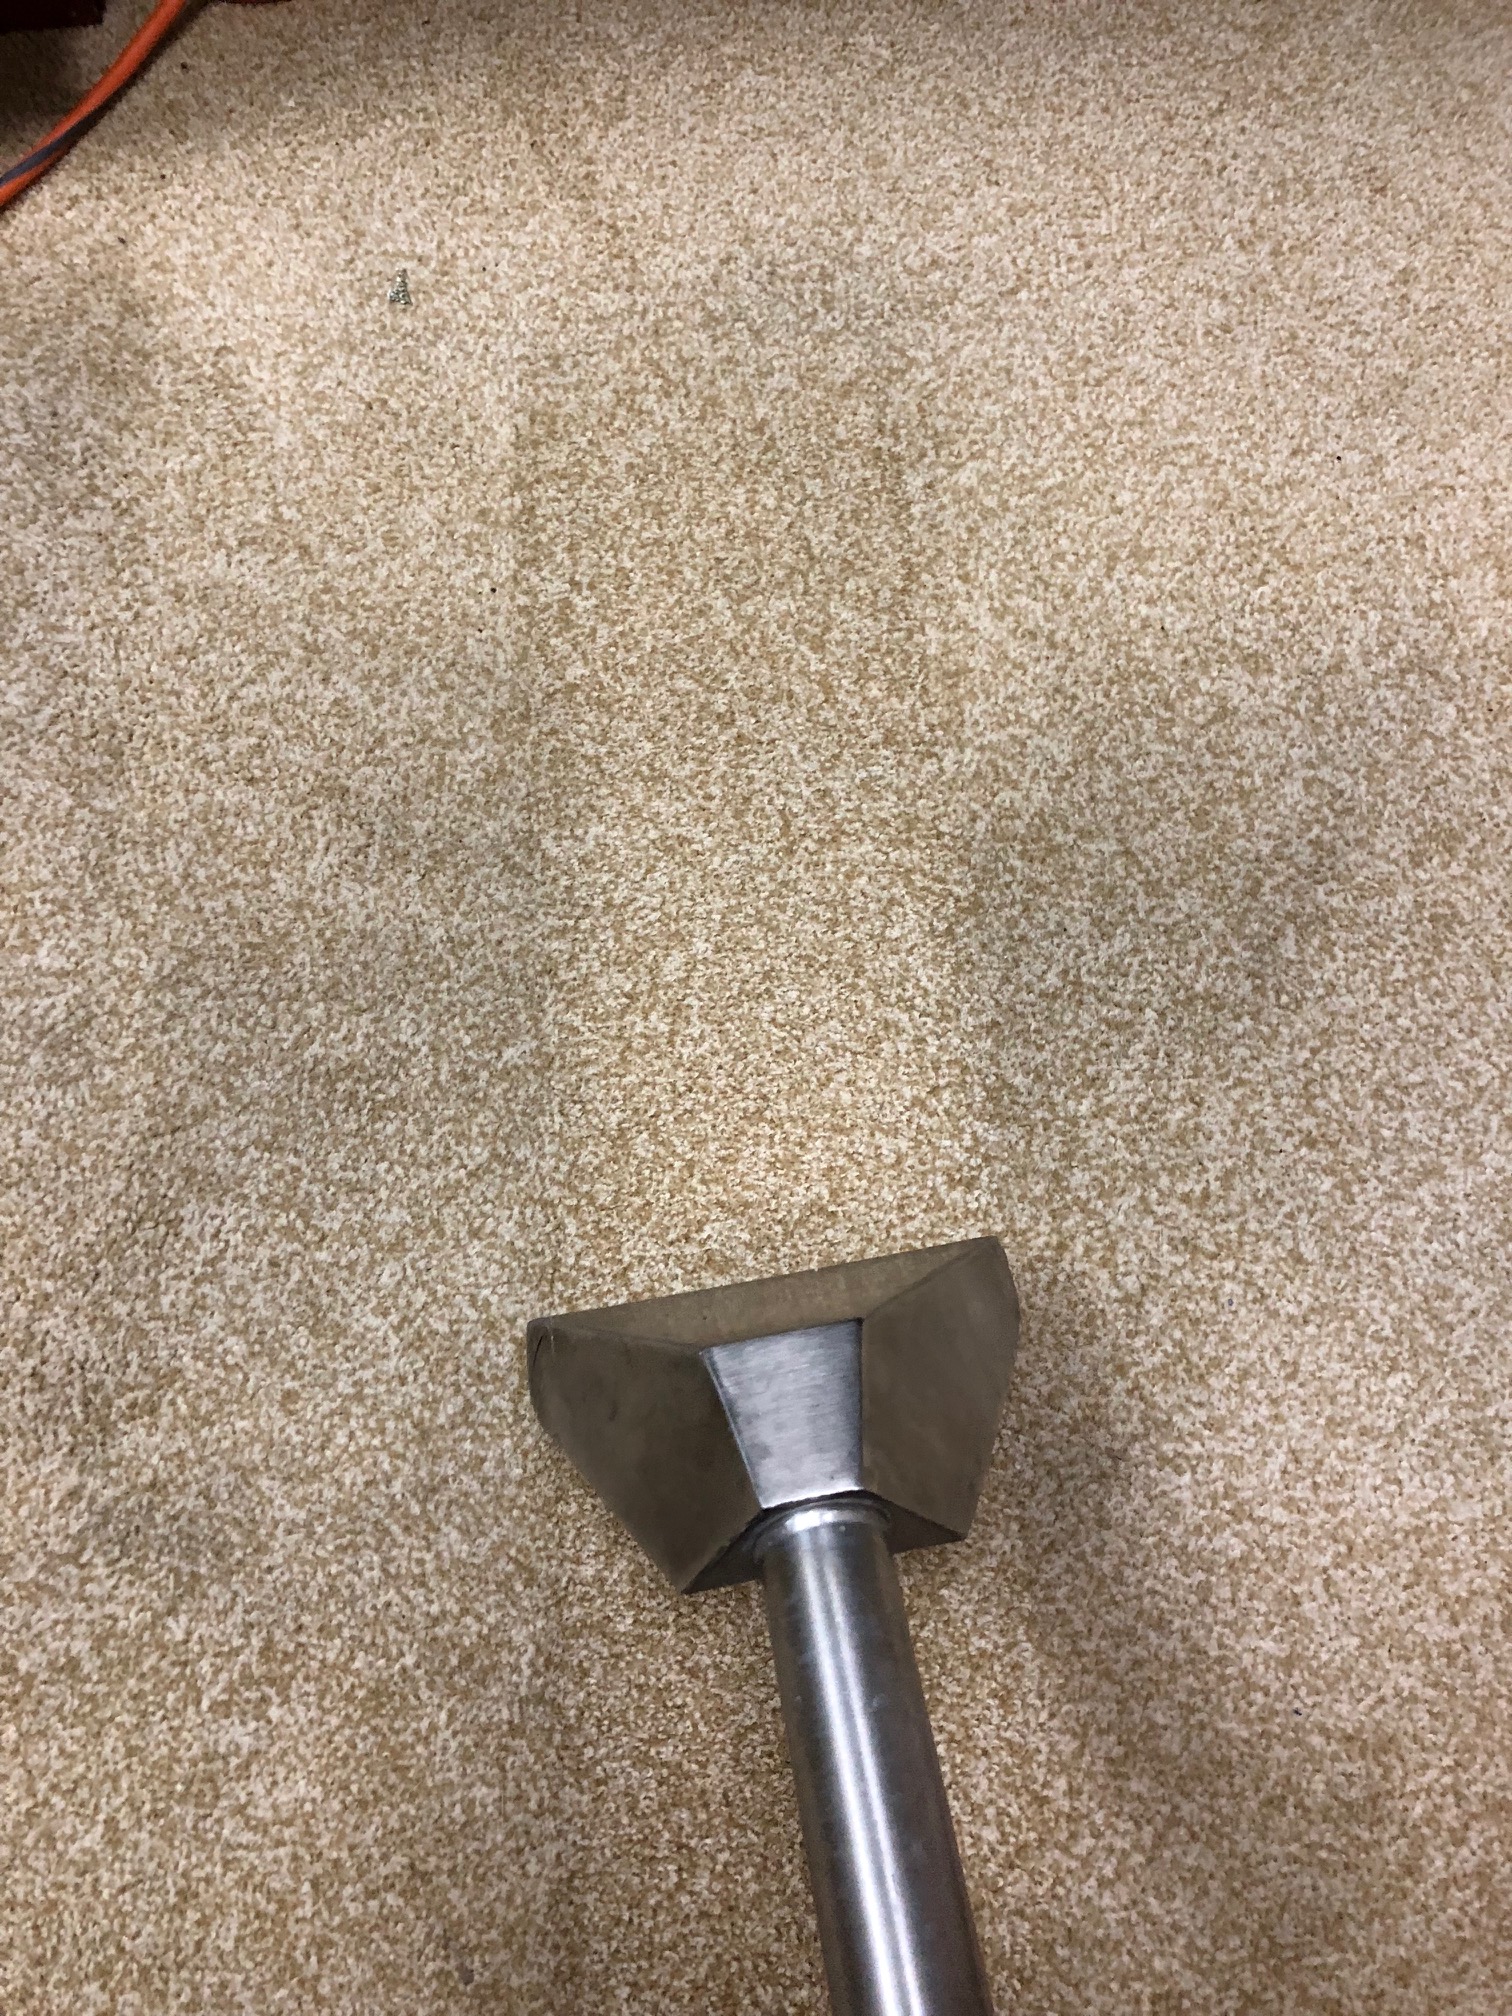 carpet-cleaning-phoenix.jpg